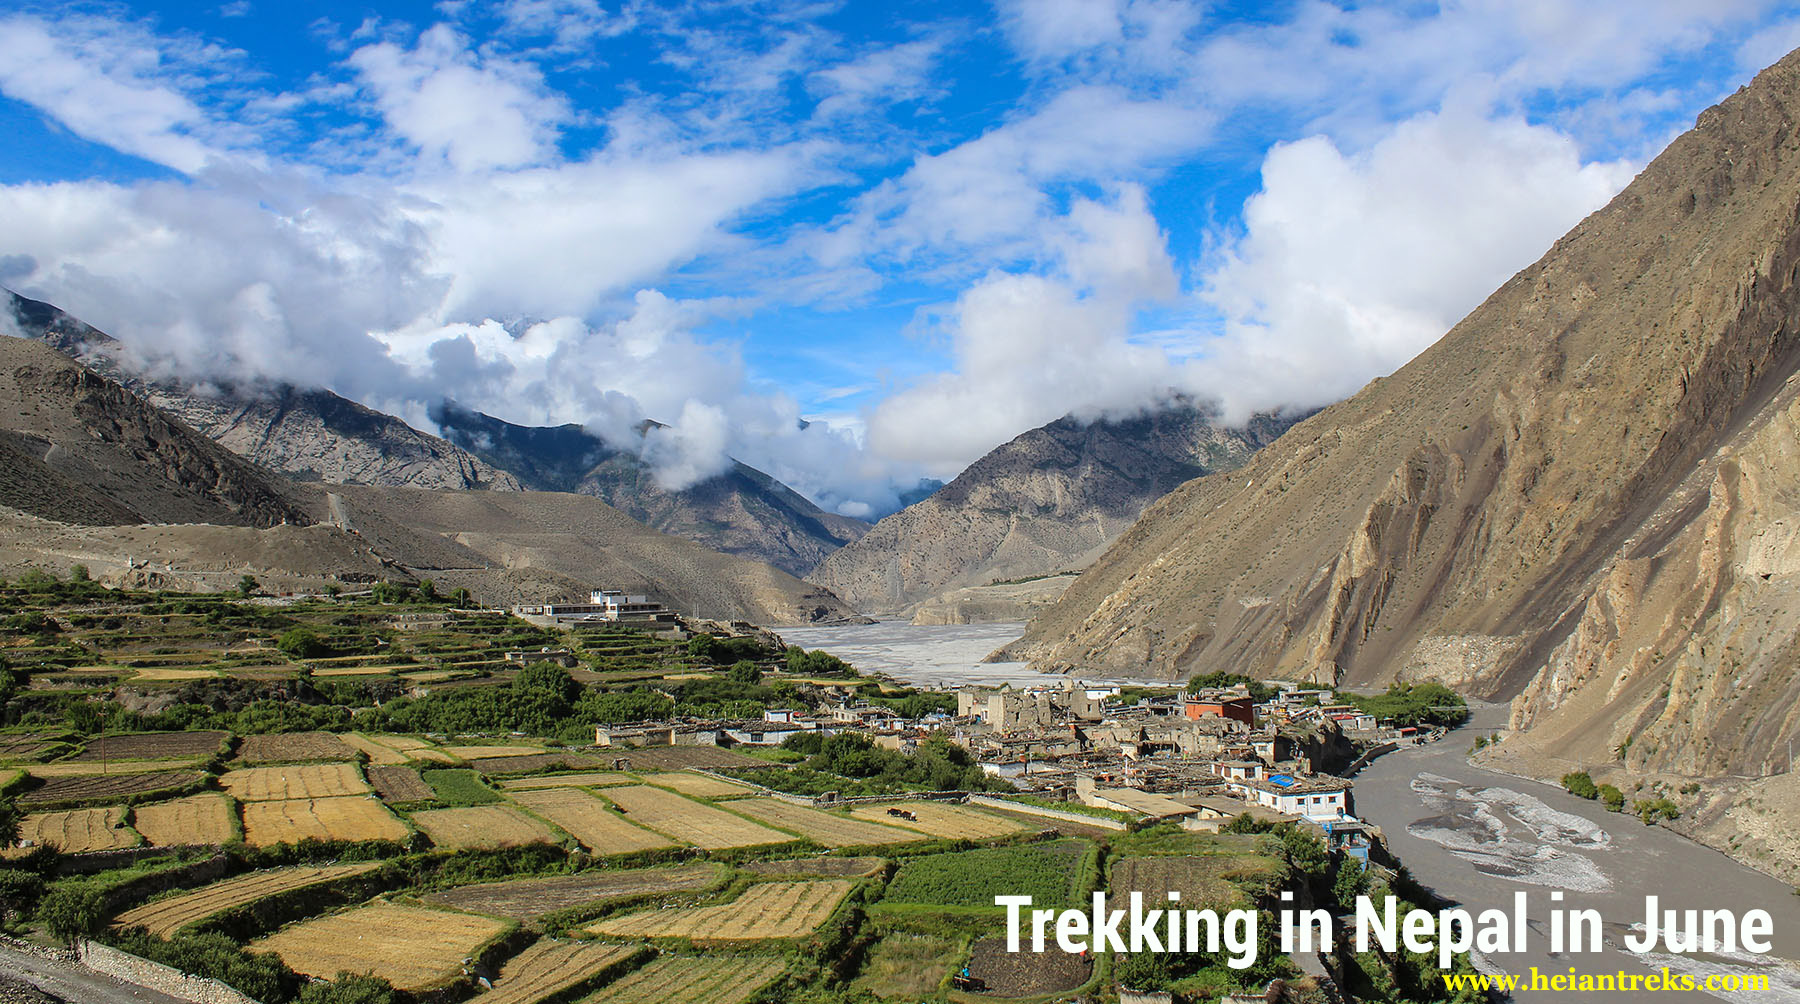 Trekking in Nepal in June